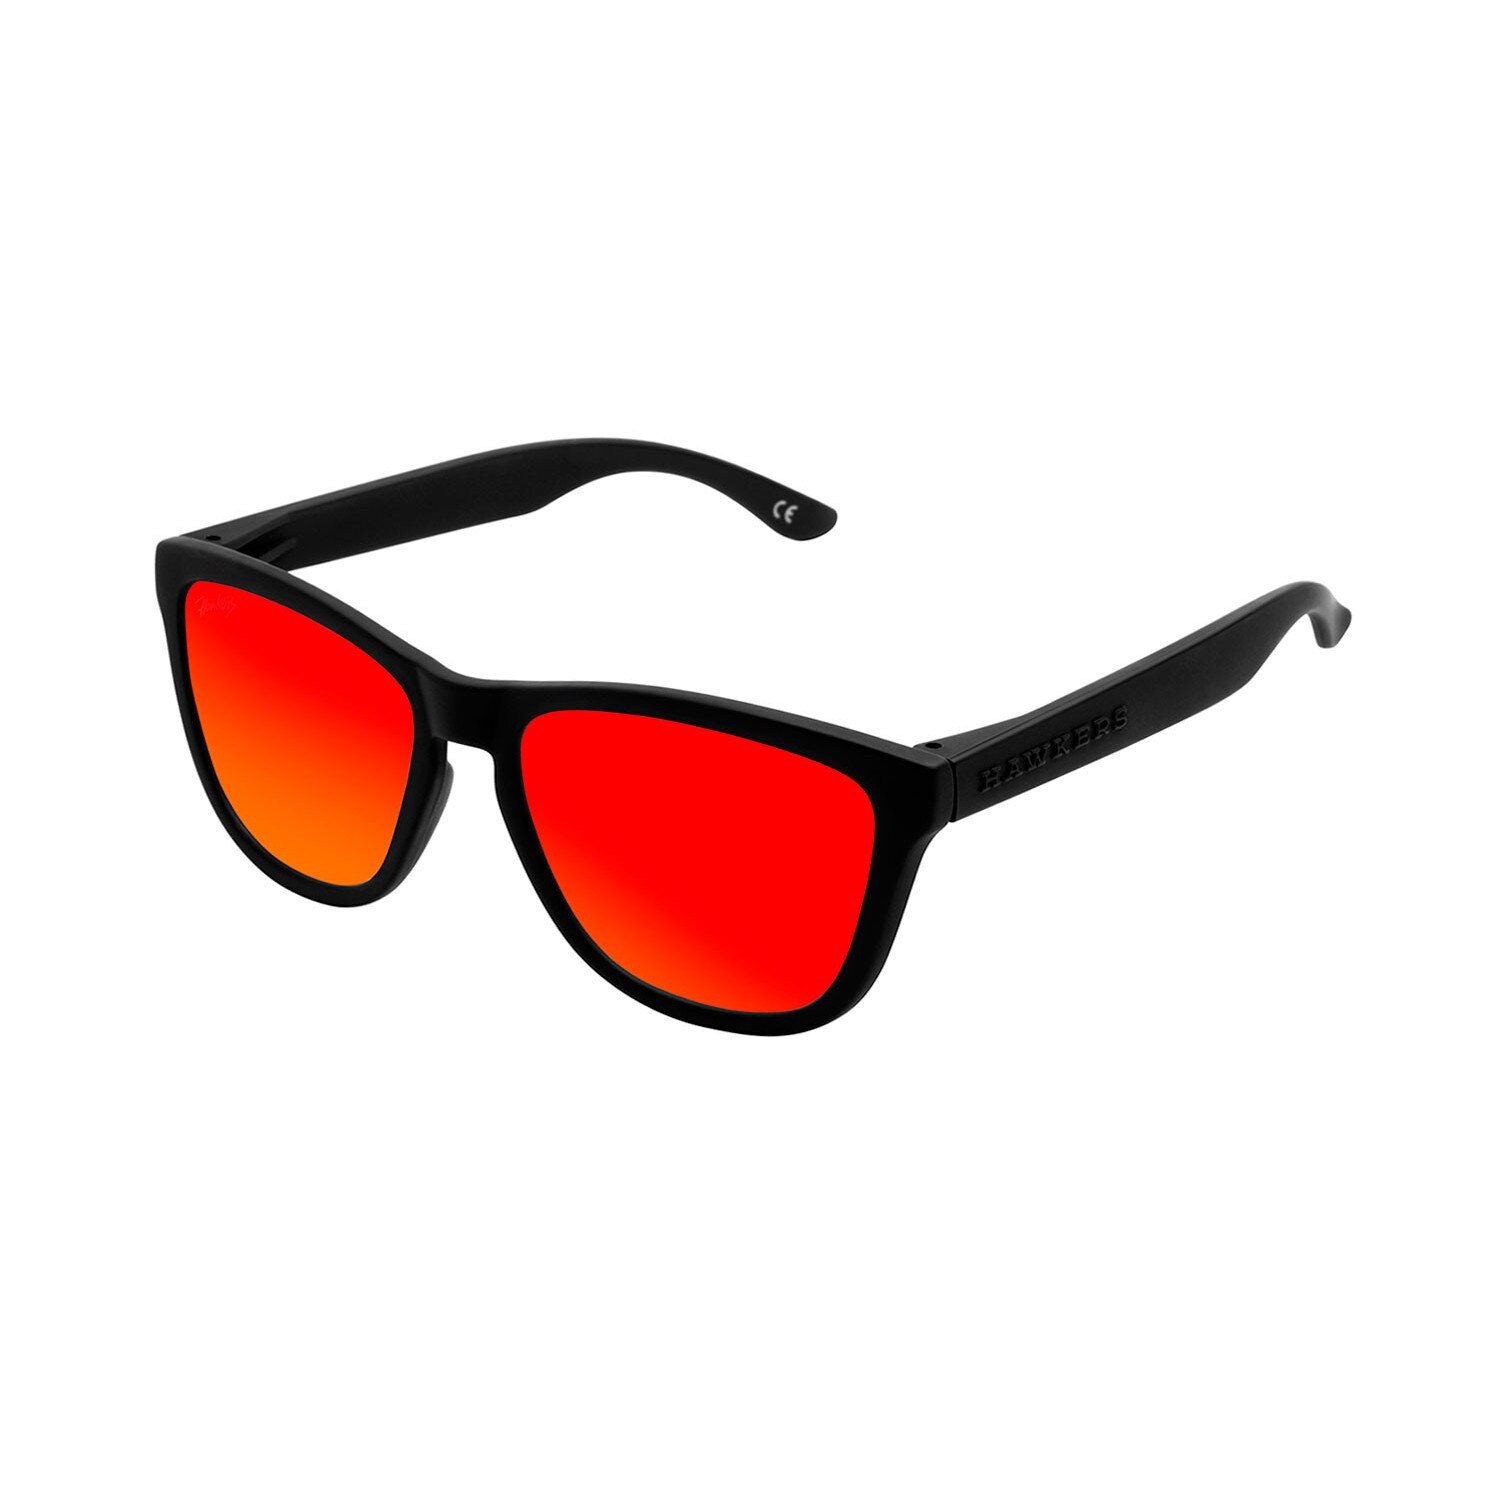 Unisex sunglasses. Очки Hawkers солнцезащитные. Солнечные очки унисекс. Очки Hawkers круглый. Комплект с очками Hawkers.